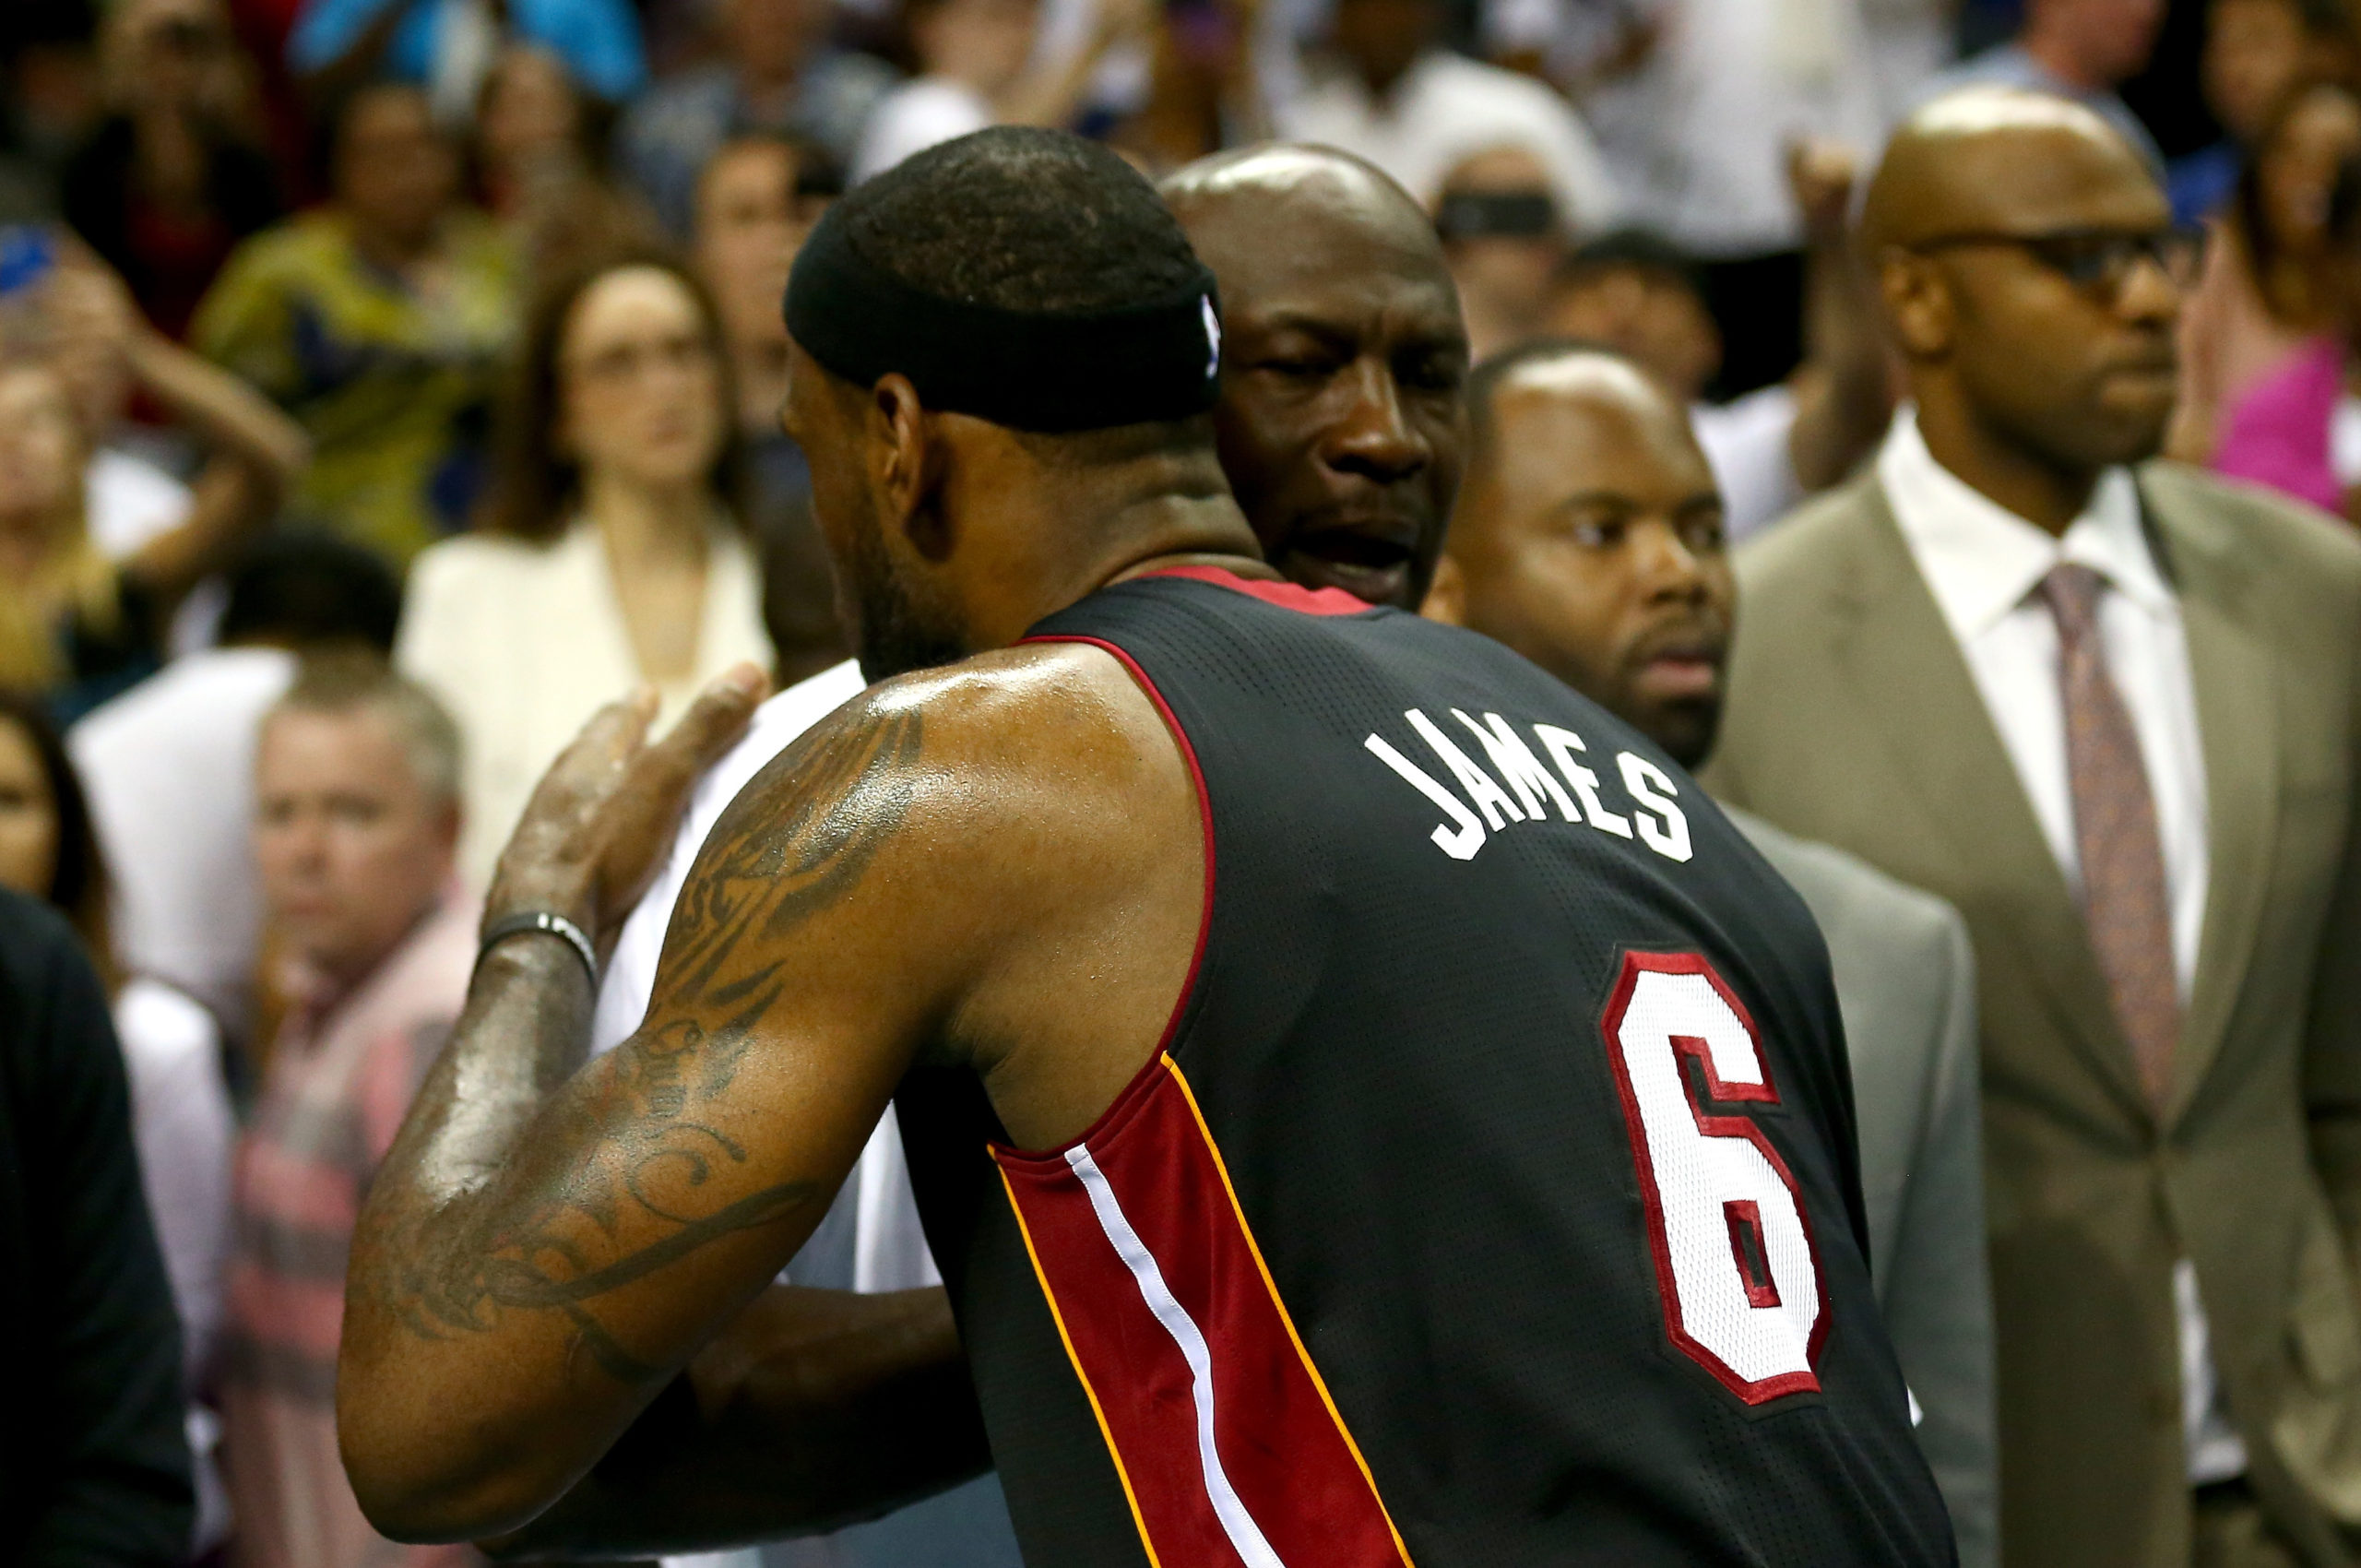 NBA Finals: Πρώτος στο ποσοστό νικών με 68% ο Jordan, ακολουθεί ο Bryant, πολύ πιο πίσω ο LeBron (pic)